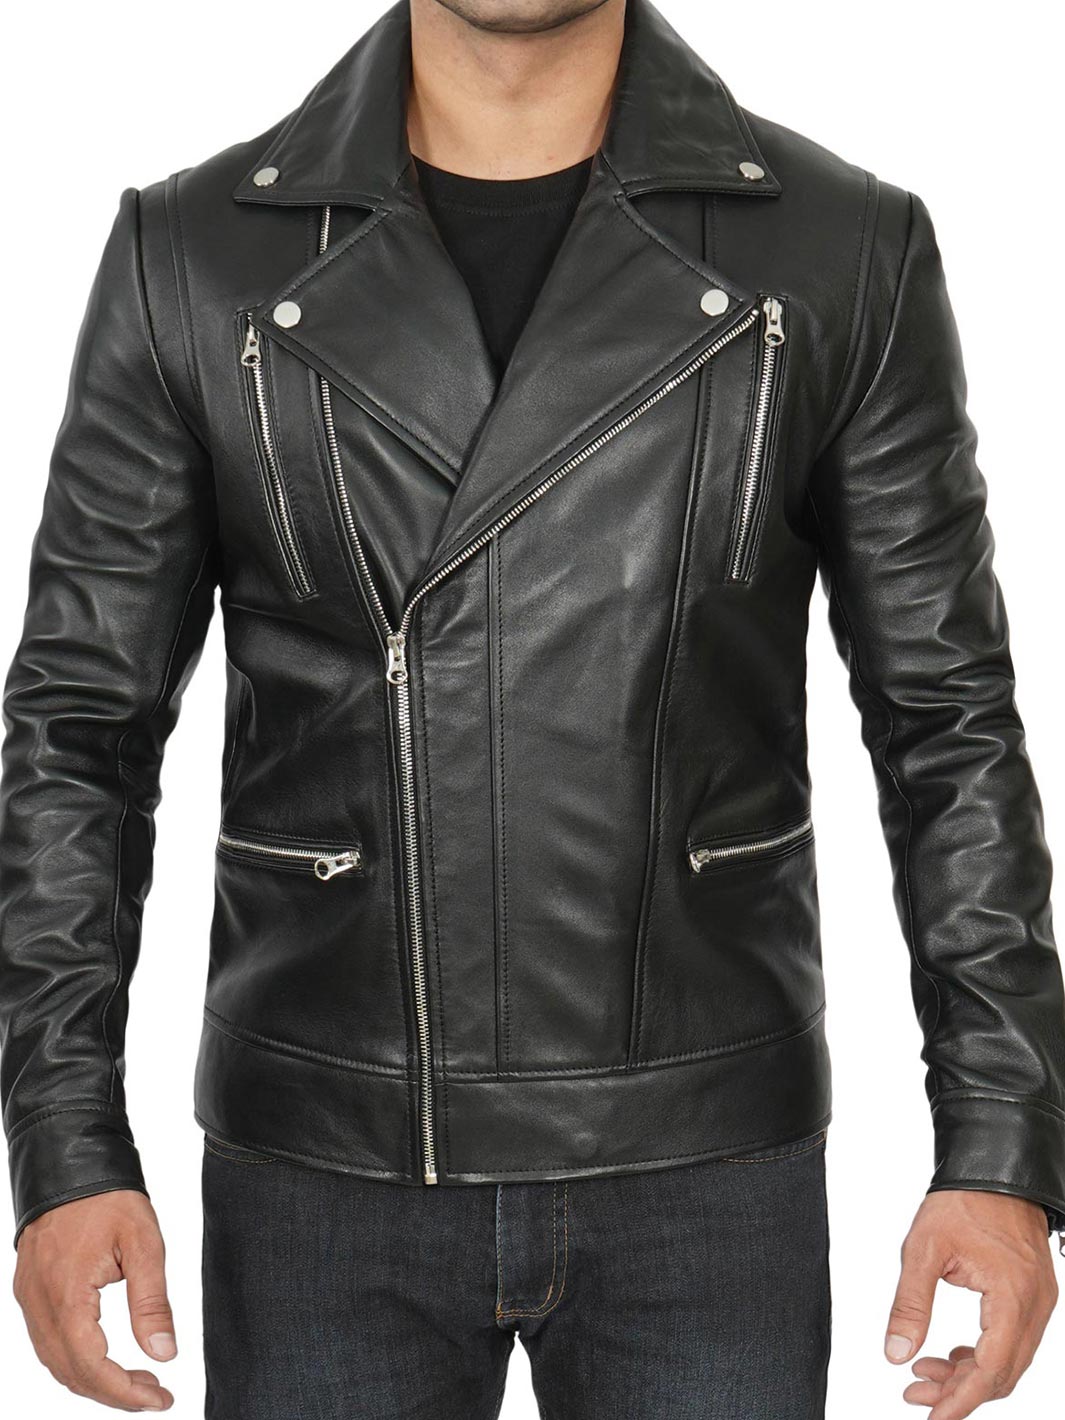 Men biker leather jacket black | Real lambskin leather | Decrum